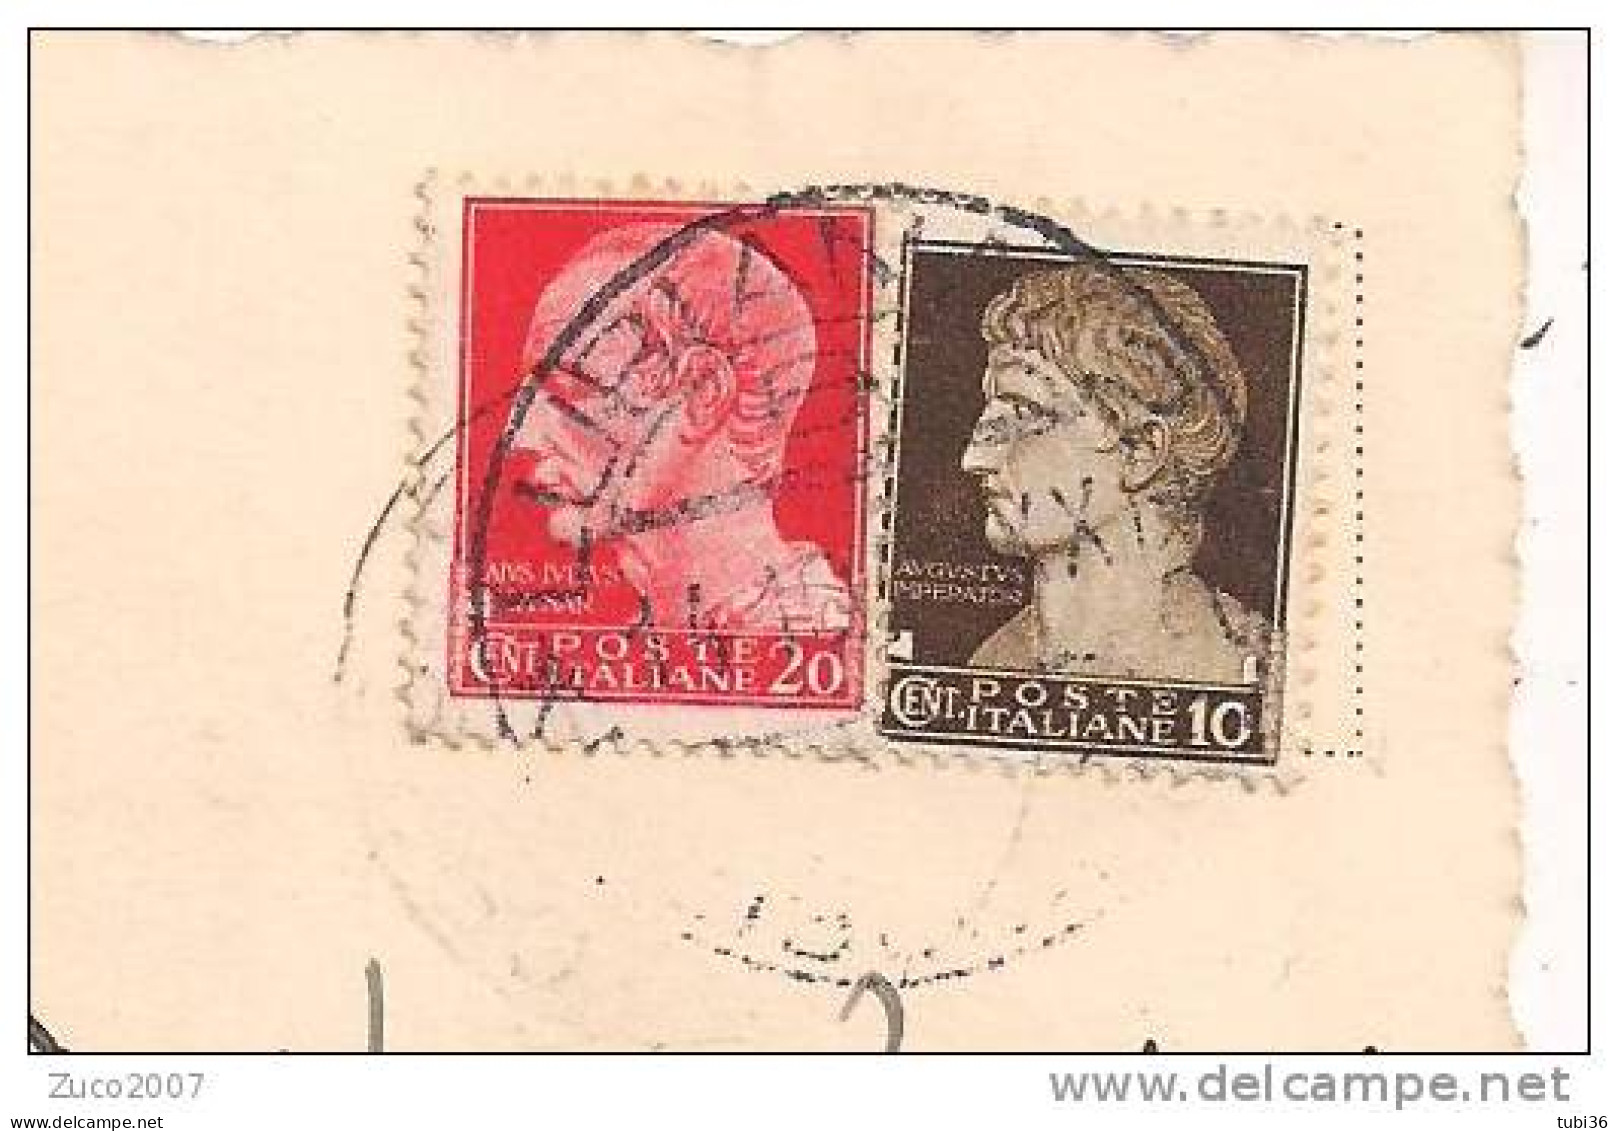 LUBIANA, CARTOLINA PM. 82, IMPERIALE 20+10,  VIAGGIATA  1942, TIMBRO POSTE LUBIANA X ROMA, - Lubiana